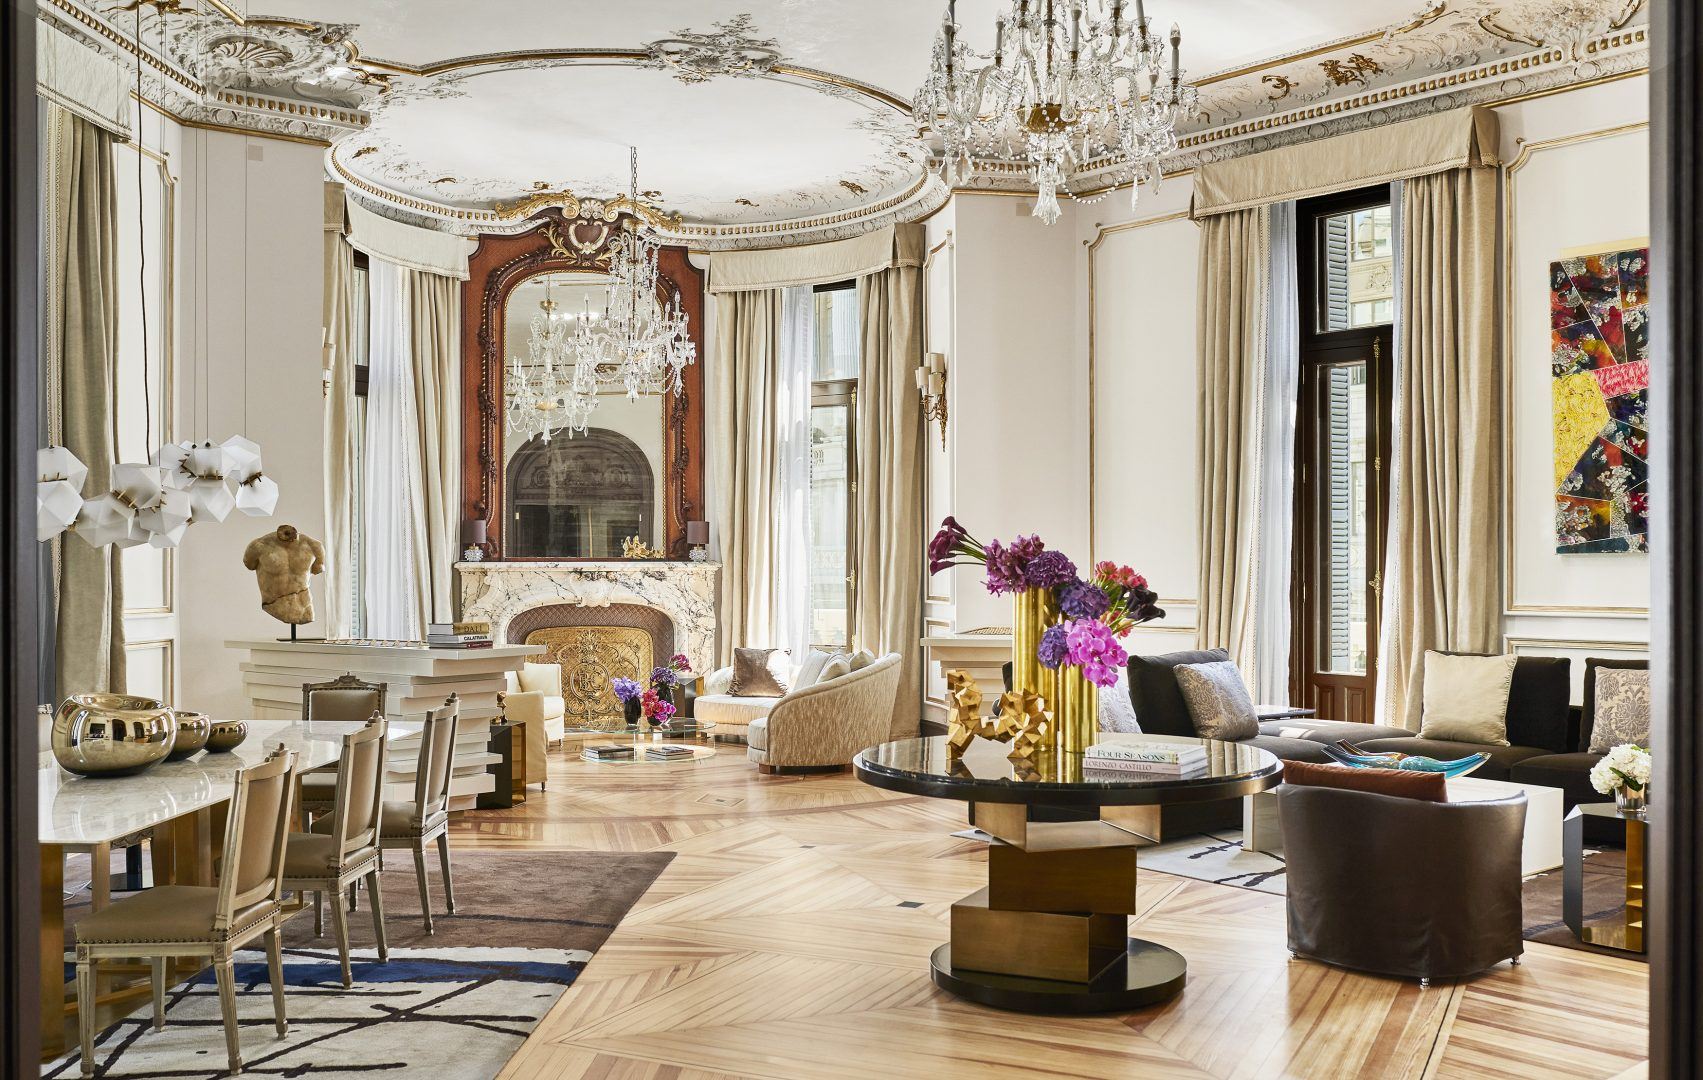 Four Seasons Hotel Madrid Royal Suite Living Room 3 1703x1080 - Four Seasons Hotel, Madrid